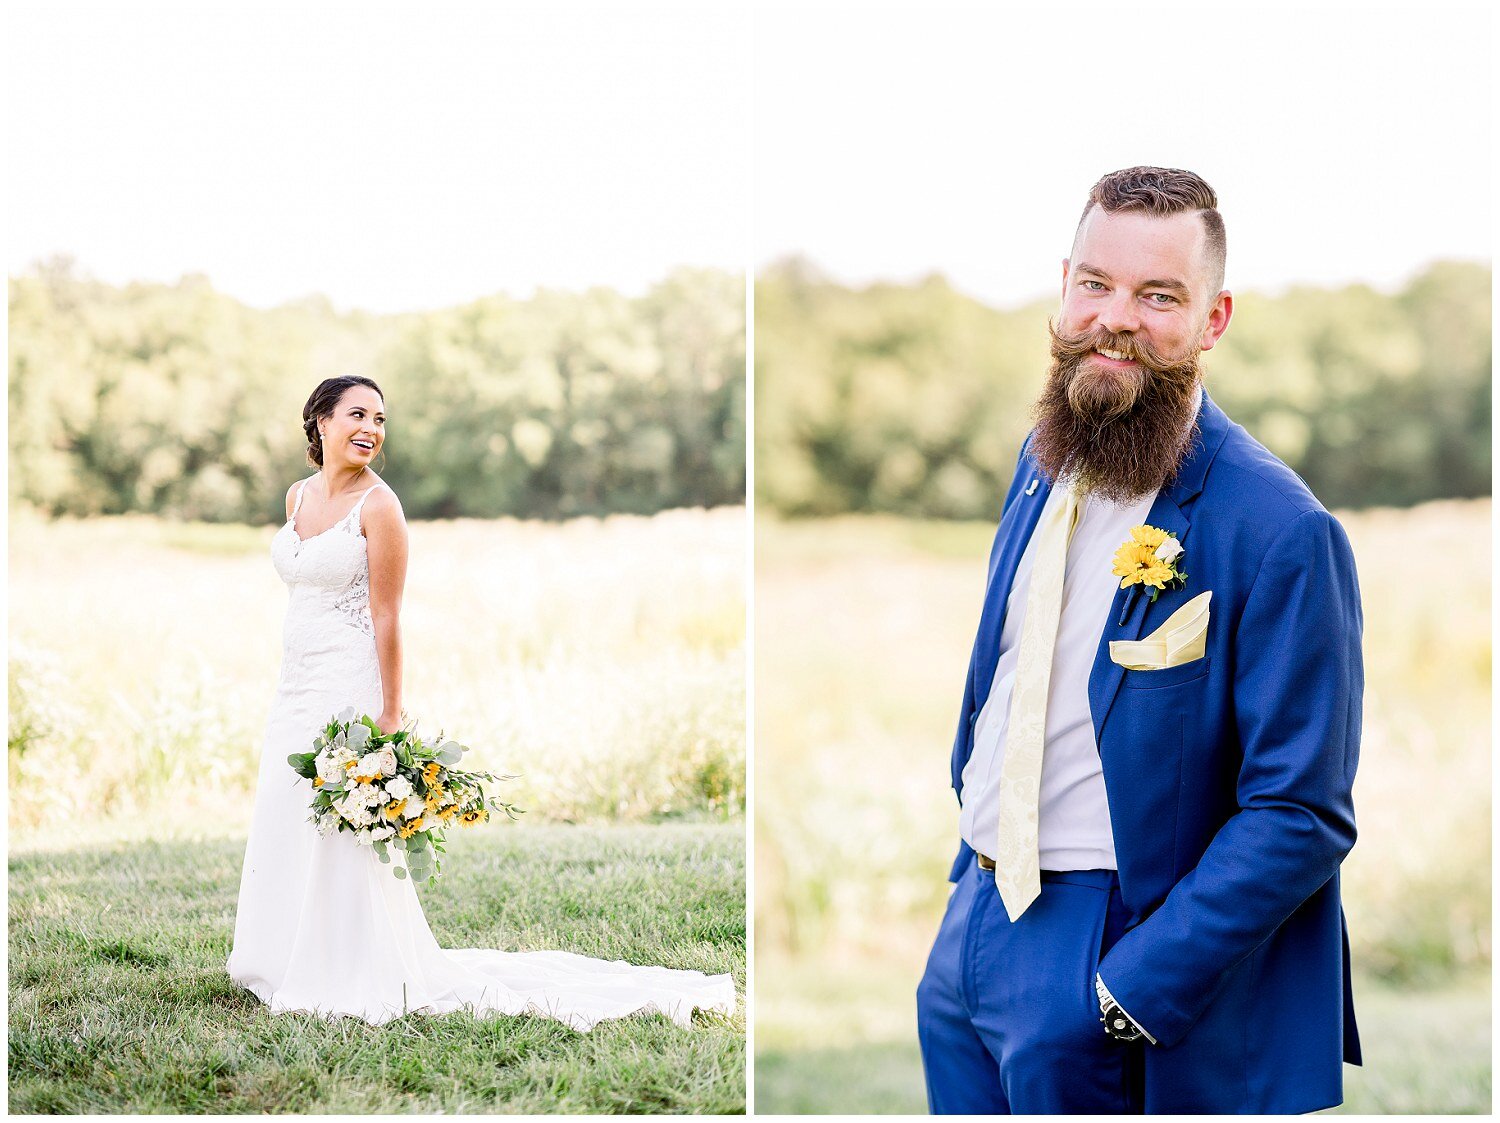 Yellow-and-Navy-Summer-Outdoor-Wedding-The-Legacy-Kansas-City-B+C-08-2020-Elizabeth-Ladean-Photography-photo-_5479.jpg